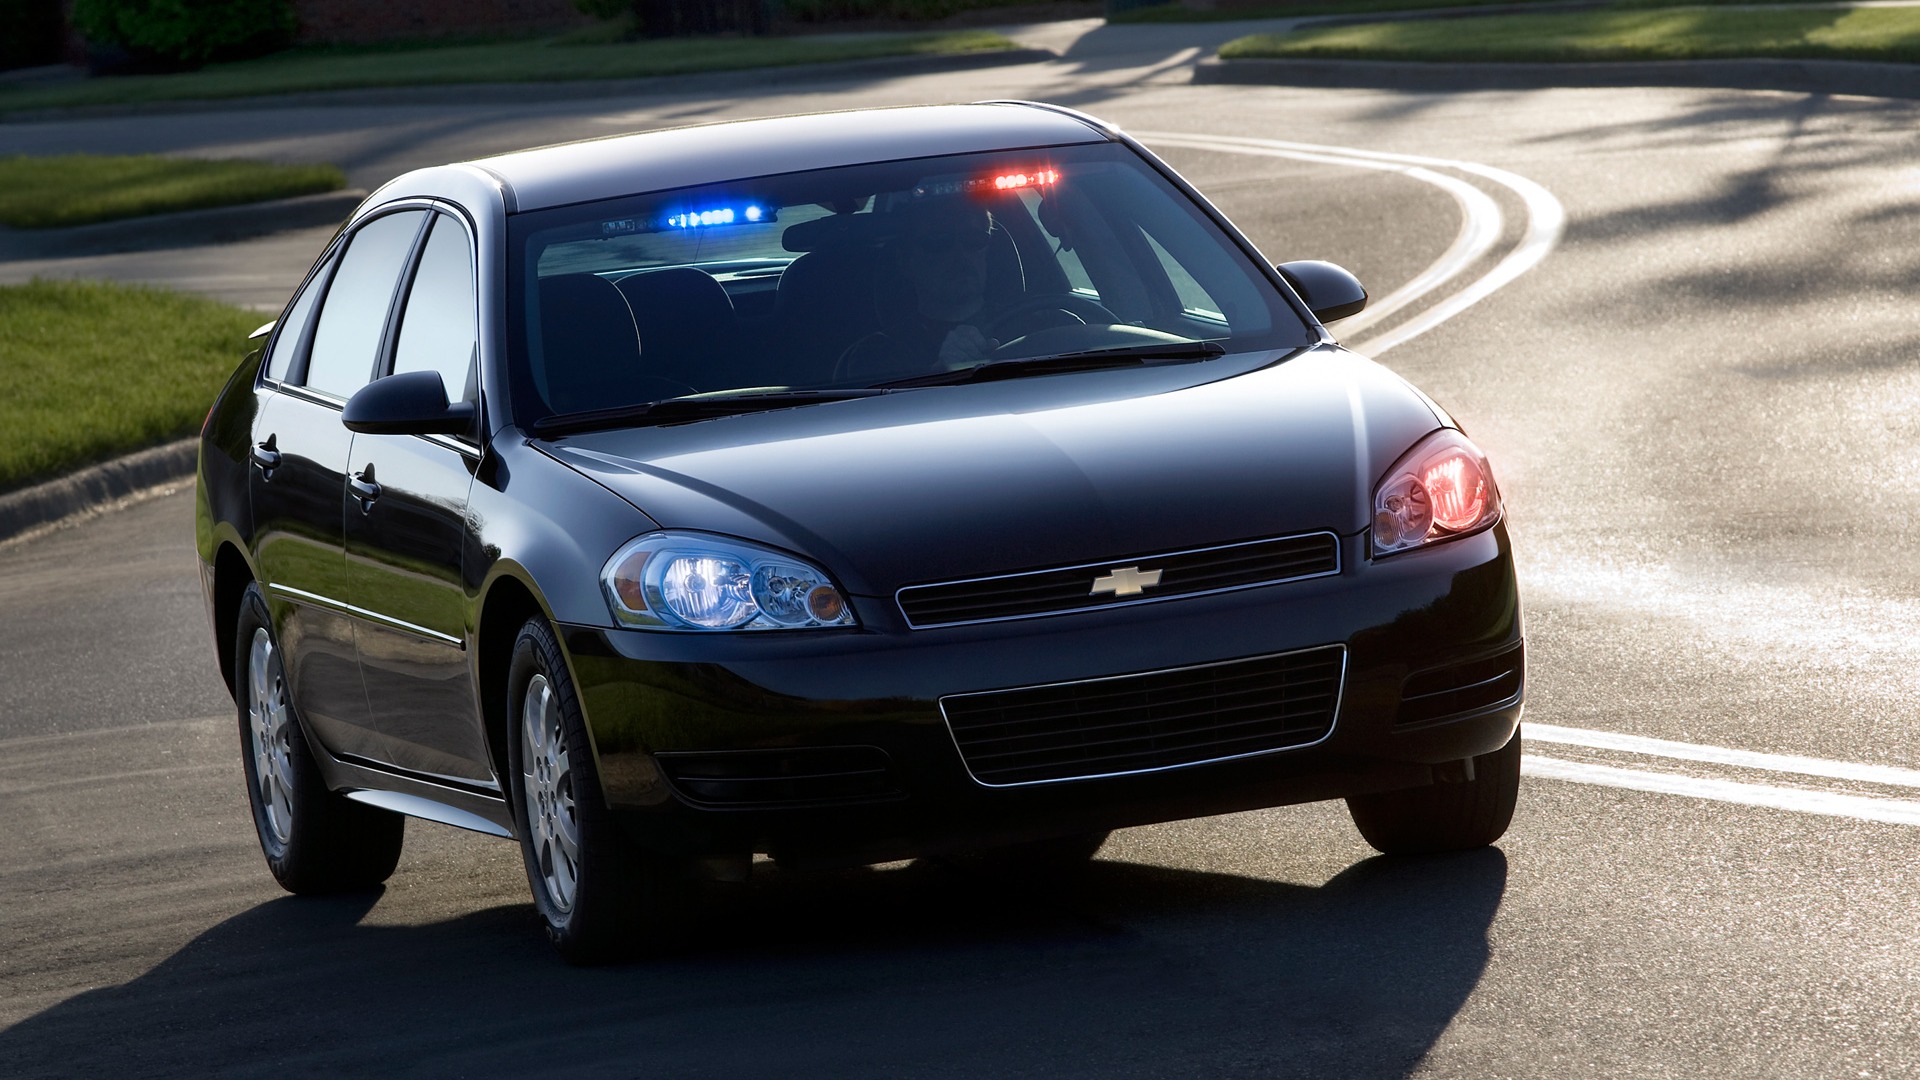 Chevrolet Impala Police Vehicle - 2011 雪佛兰6 - 1920x1080